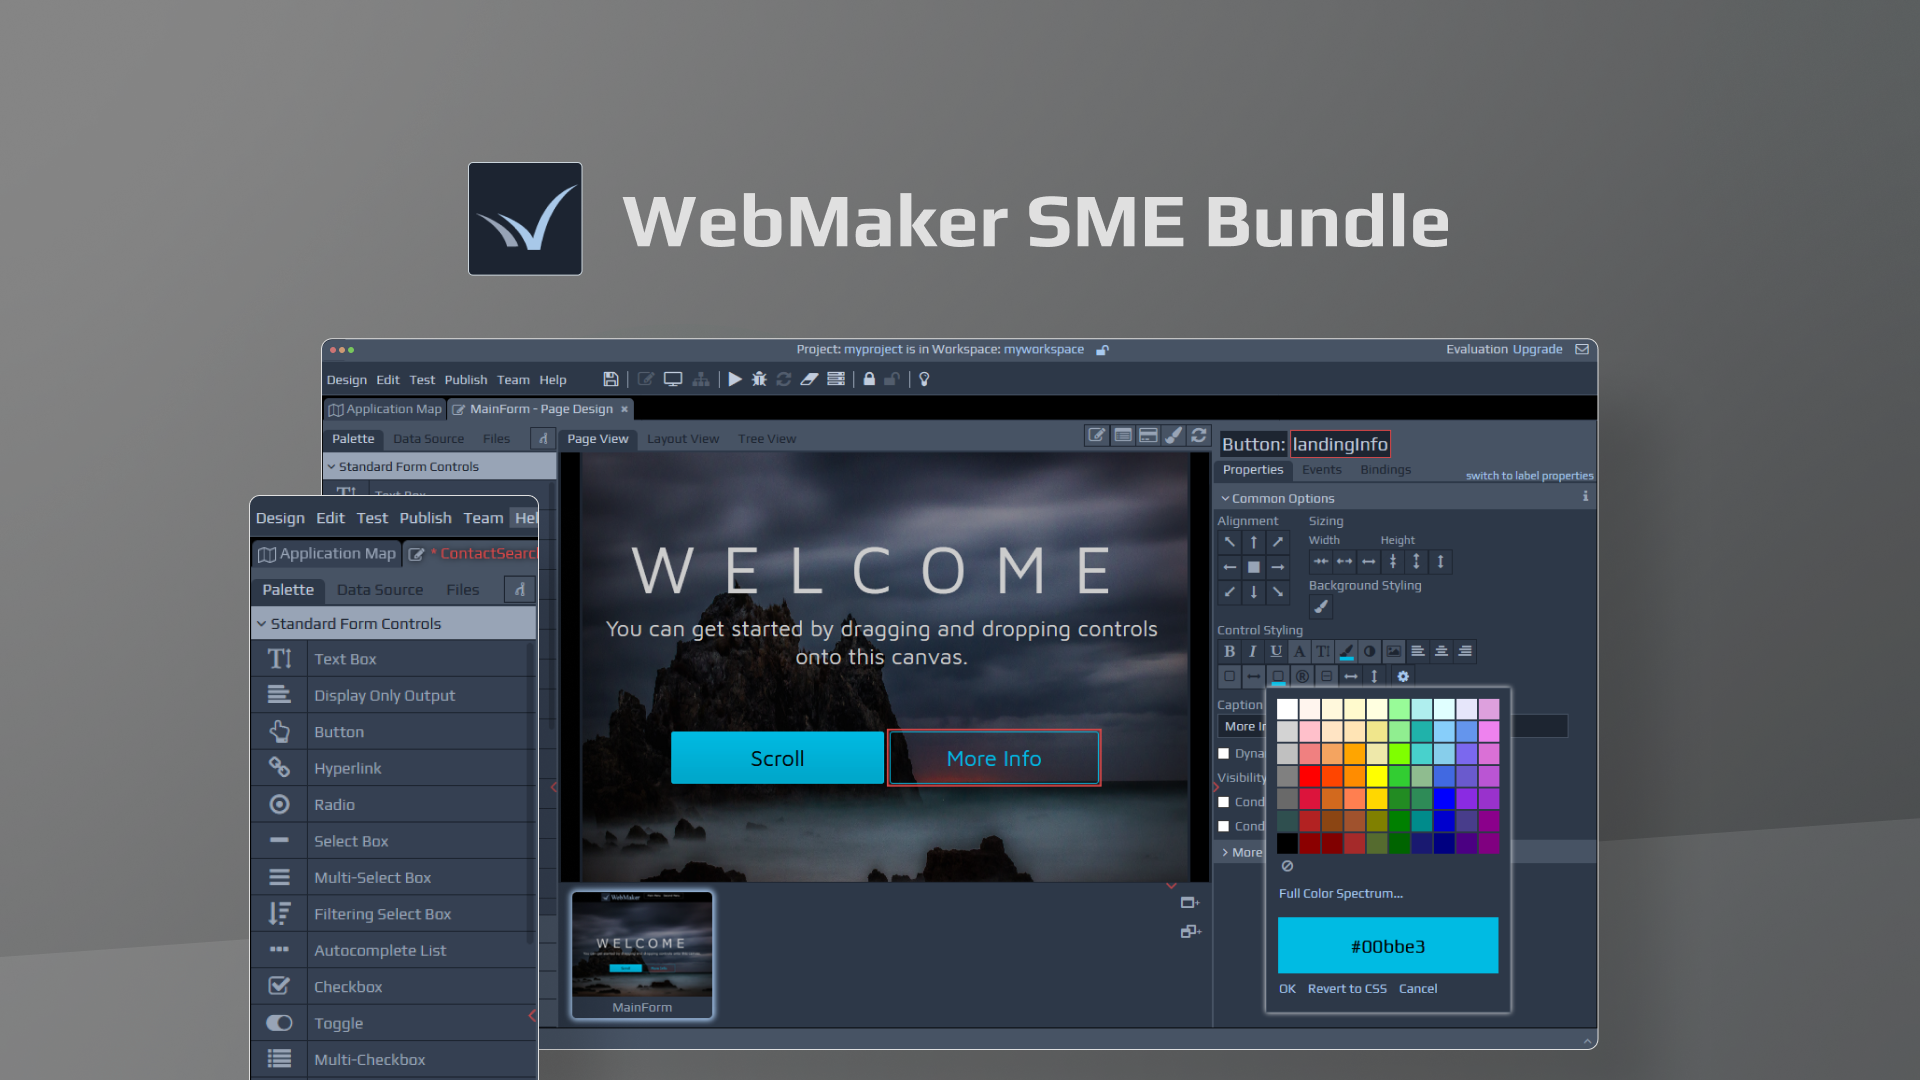 AppSumo Deal for Hyfinity WebMaker SME Bundle